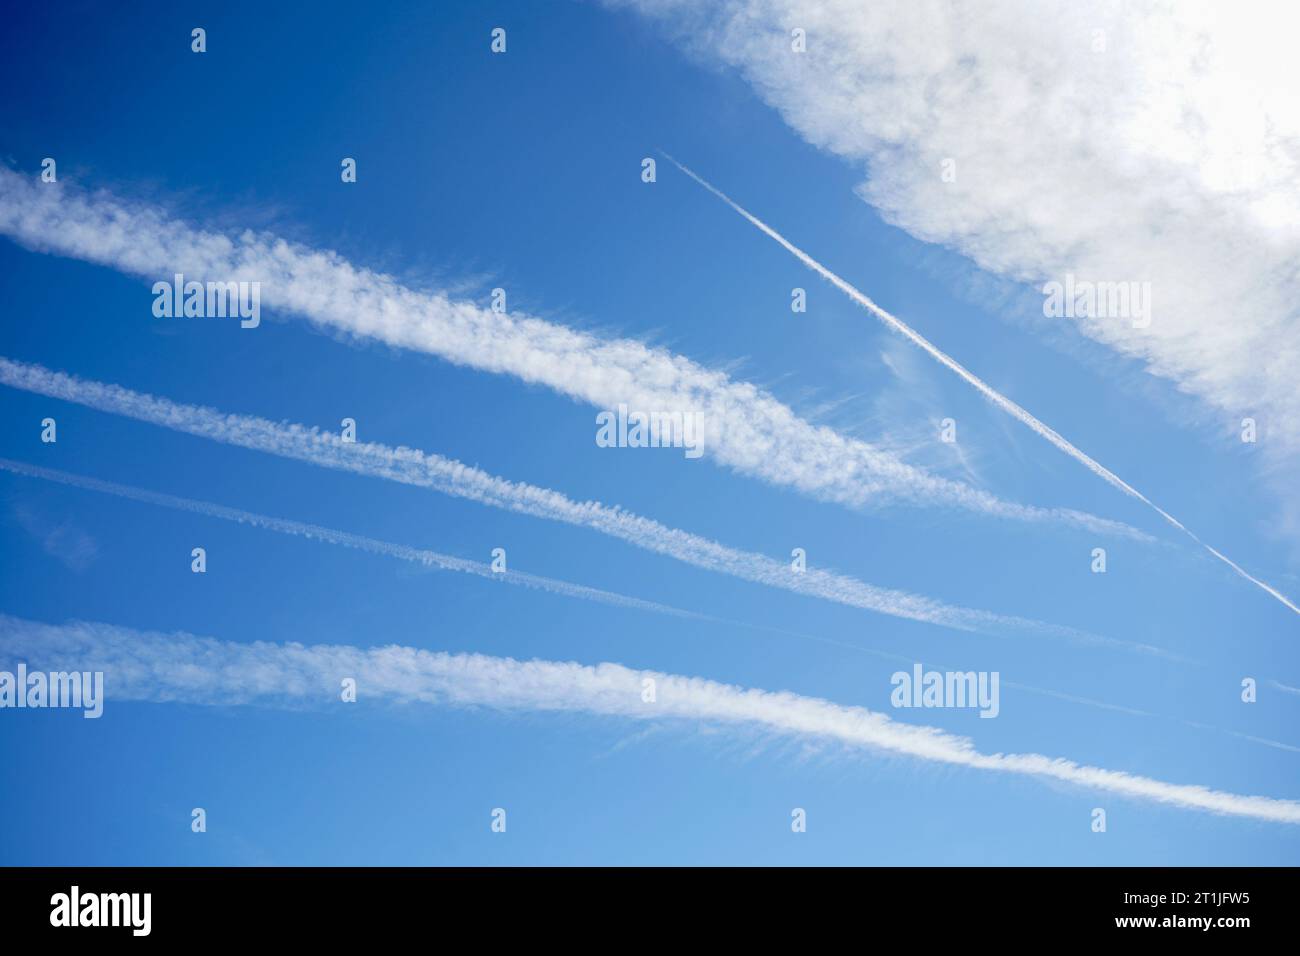 Airplane vapour trails across a deep blue sky, Spain. Stock Photo